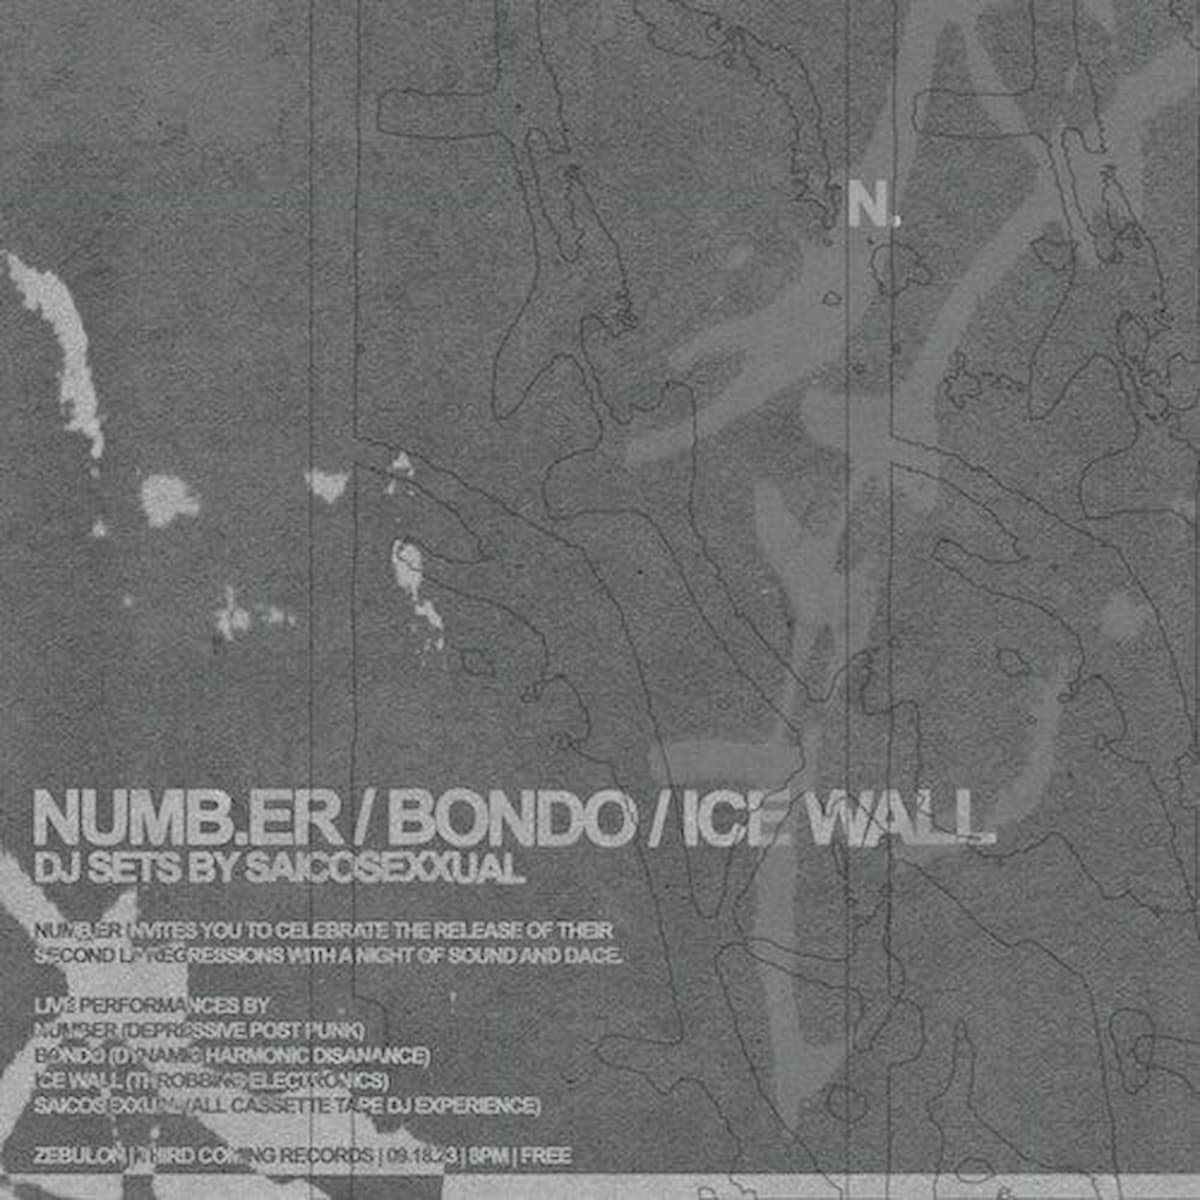 Numb.er / Bondo / Ice Wall